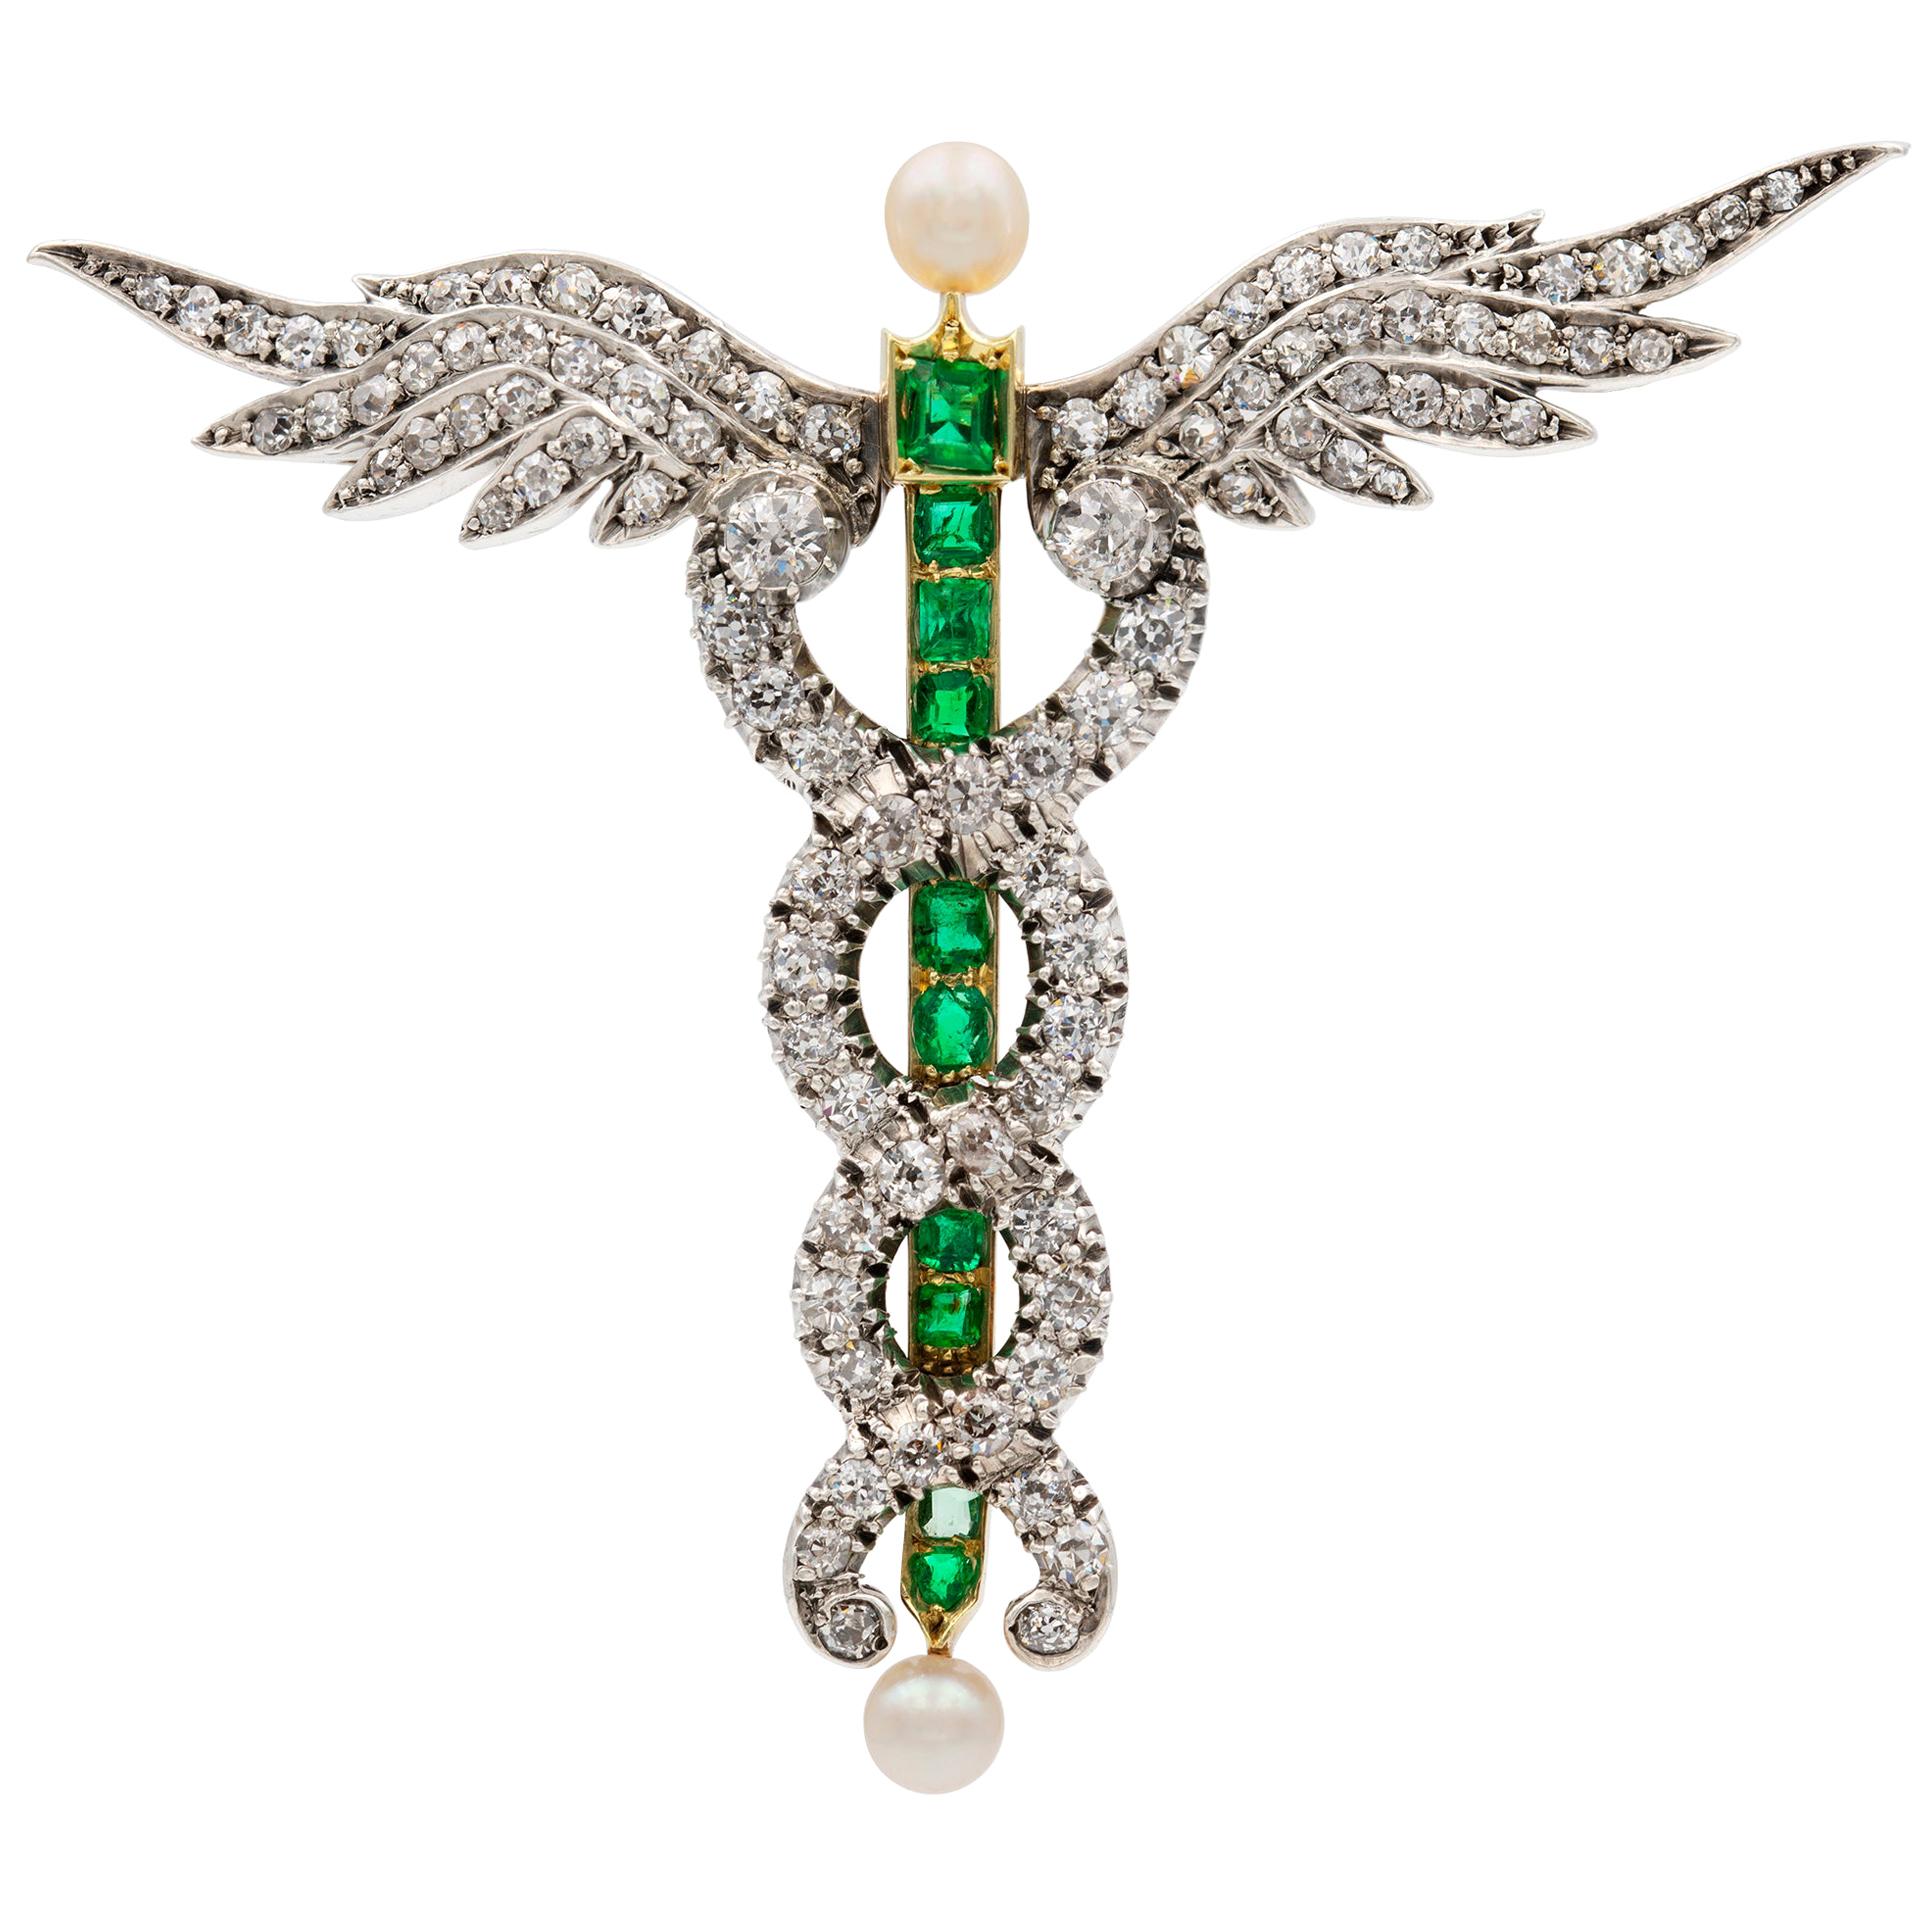 Victorian Diamond, Emerald and Pearl Caduceus Brooch